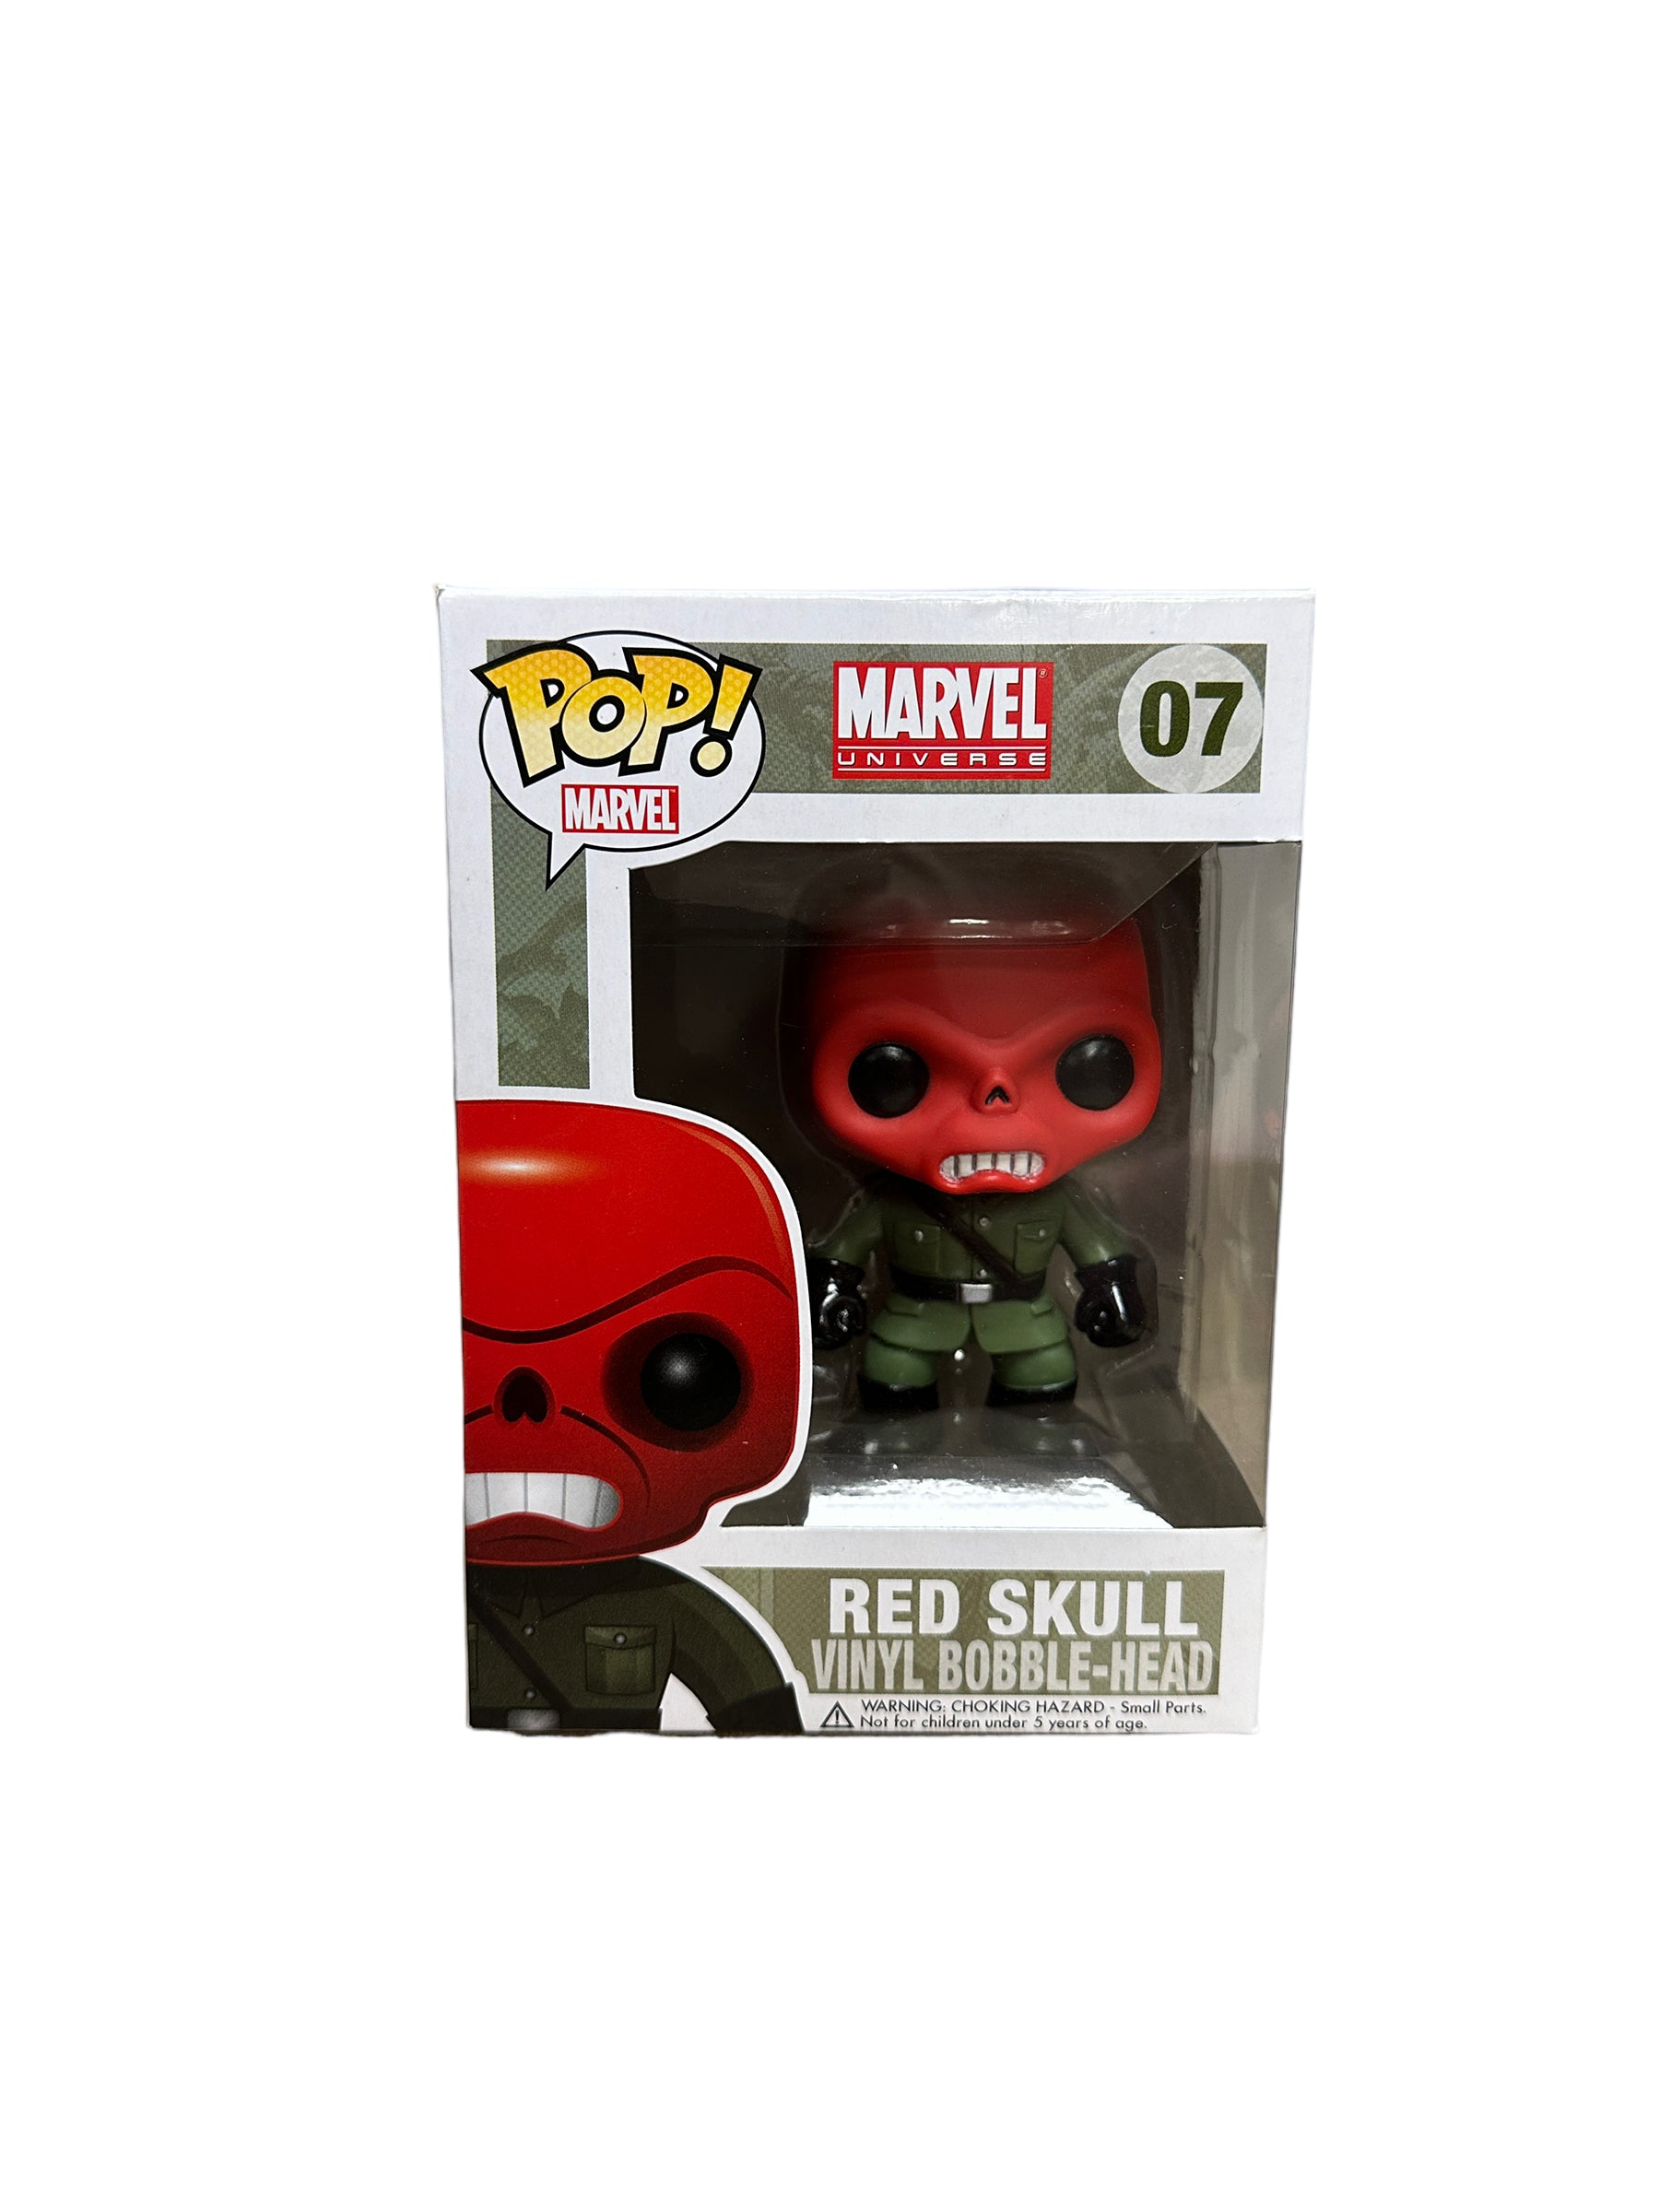 Red Skull #07 Funko Pop! - Marvel Universe - 2011 Pop! - Condition 8.5/10